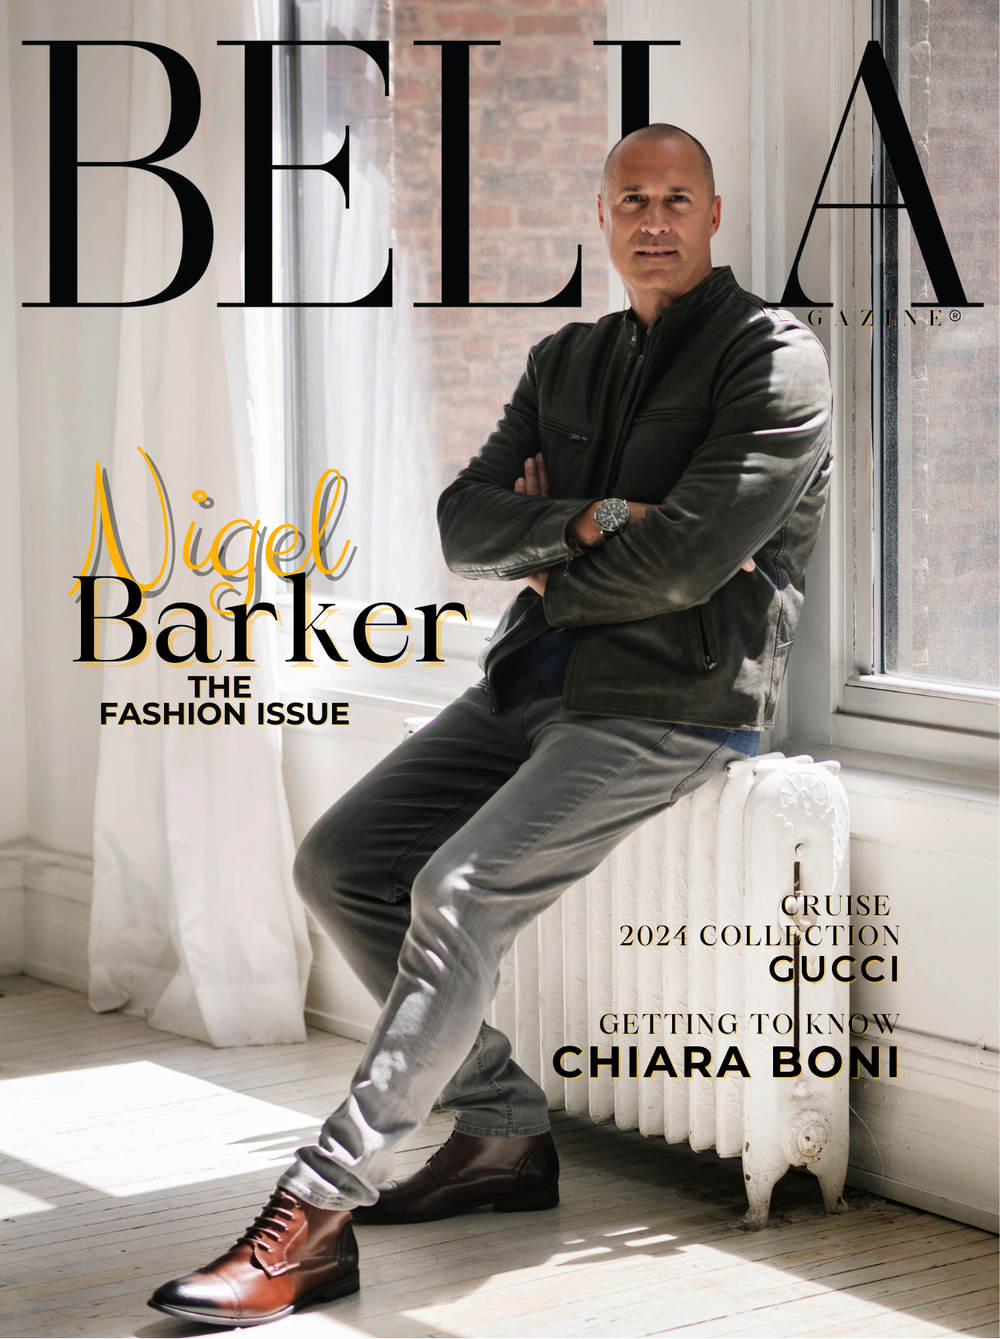 BELLA Magazine's 2023 Fashion Issue featuring Nigel Barker